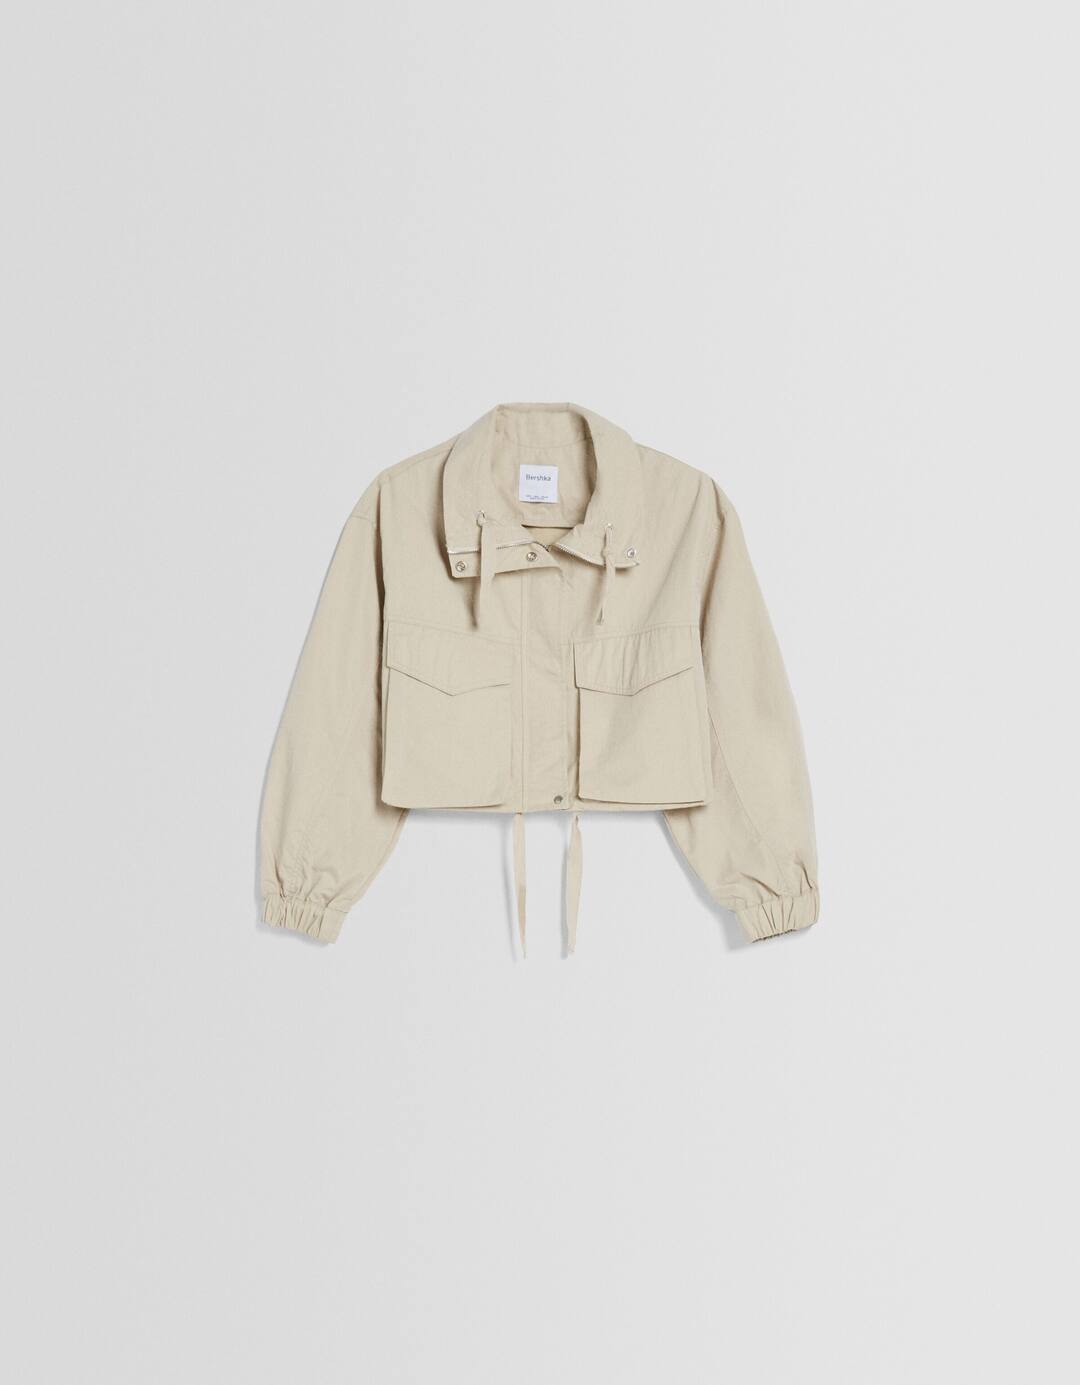 Cotton and nylon blend short jacket